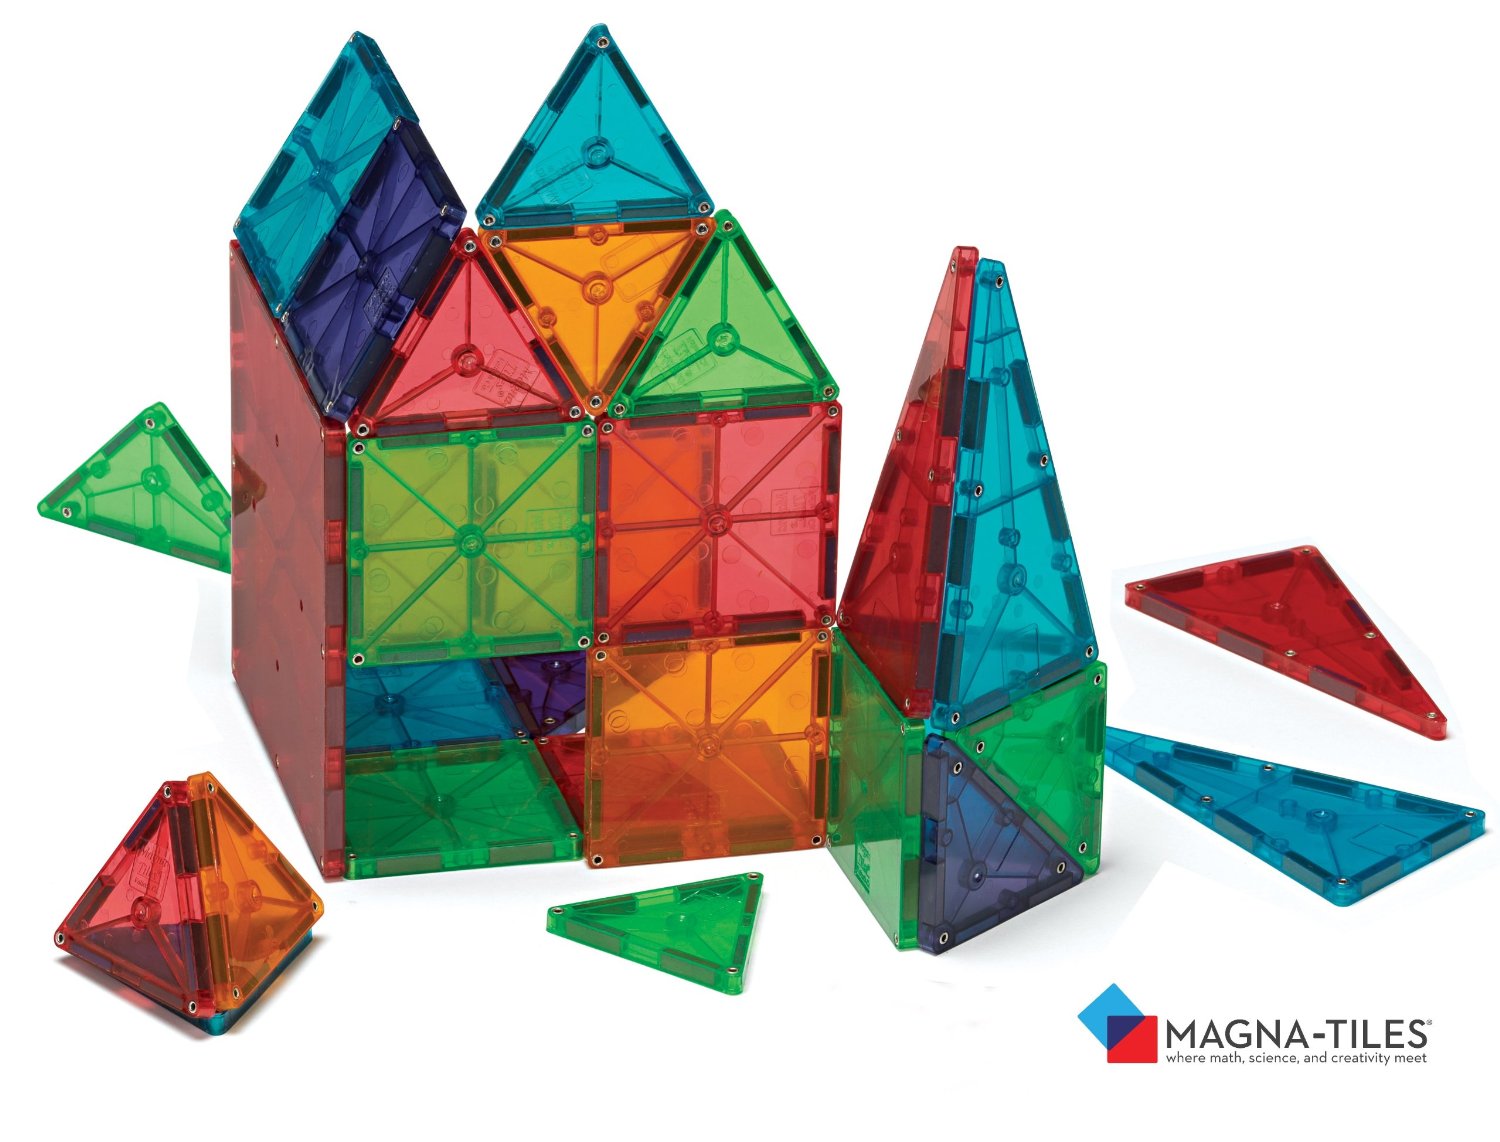 Magna-Tiles magnetic building tiles. ($52 for a set of 32)